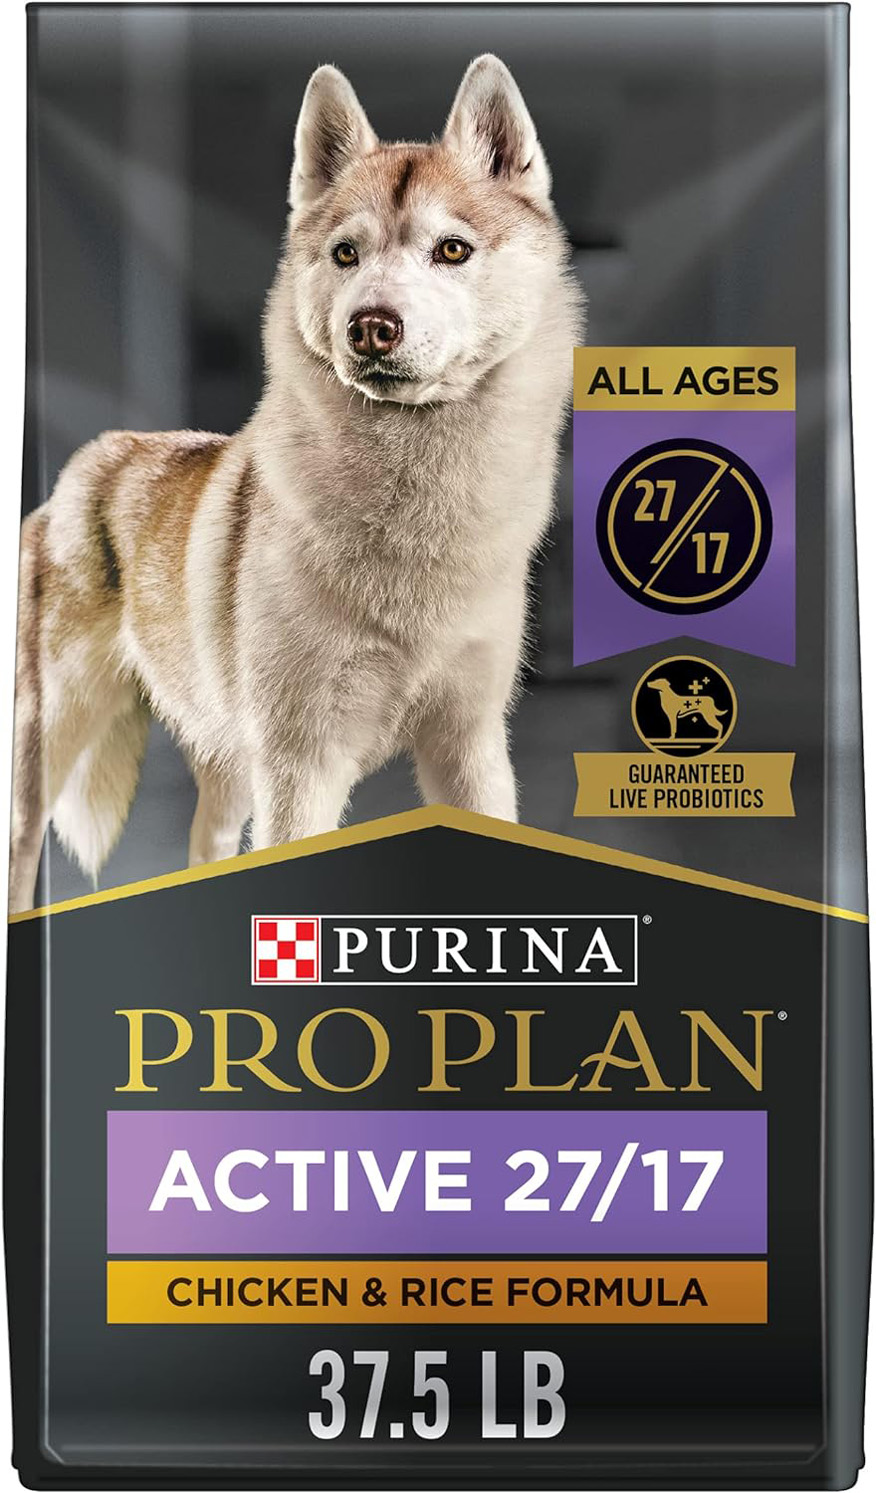 Purina Pro Plan Active High Protein Dog Food, Sport 27/17 Chicken & Rice Formula